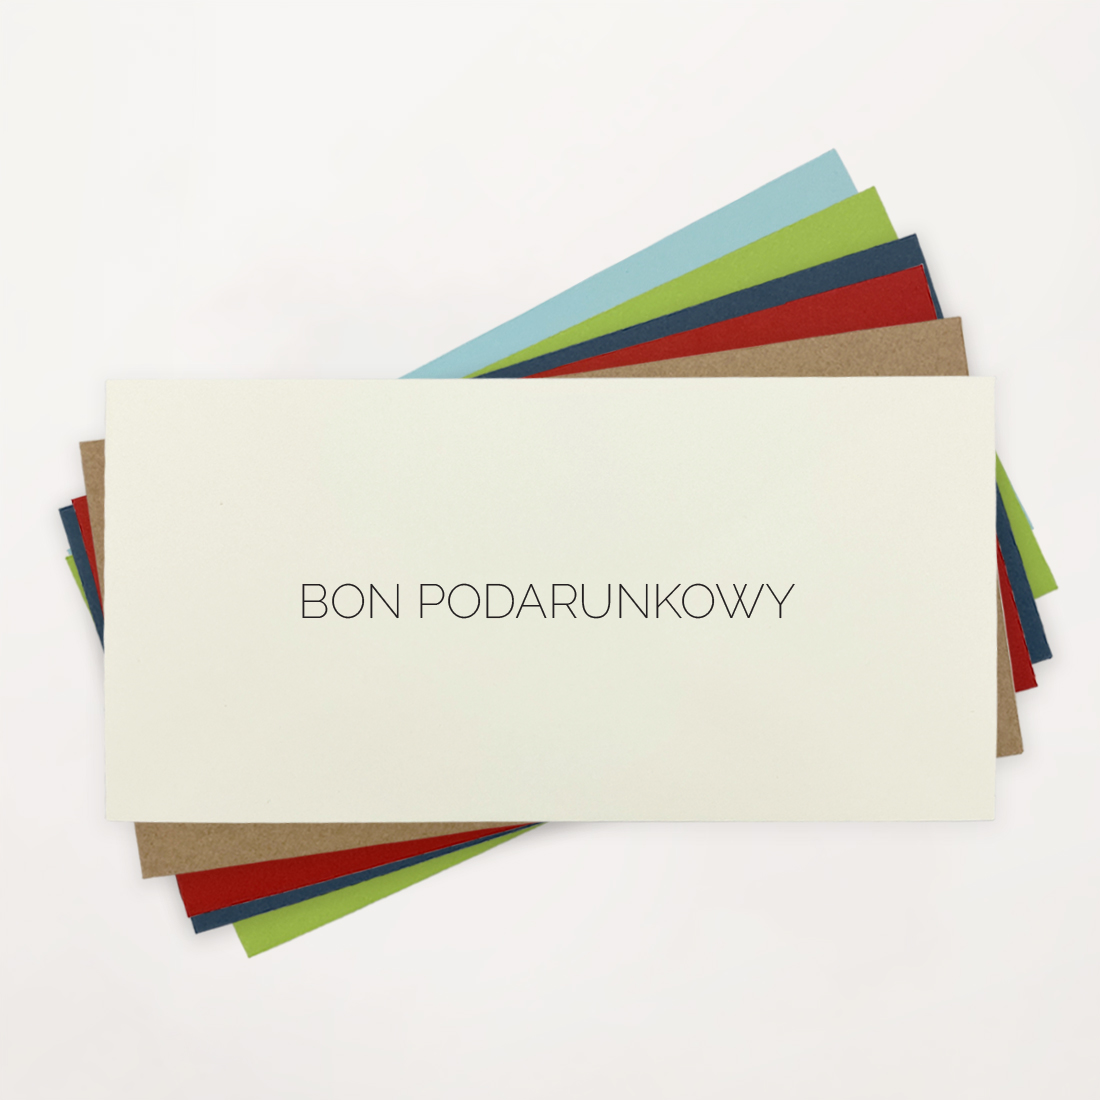 koperta voucher z nadrukiem różne kolory prostokątna